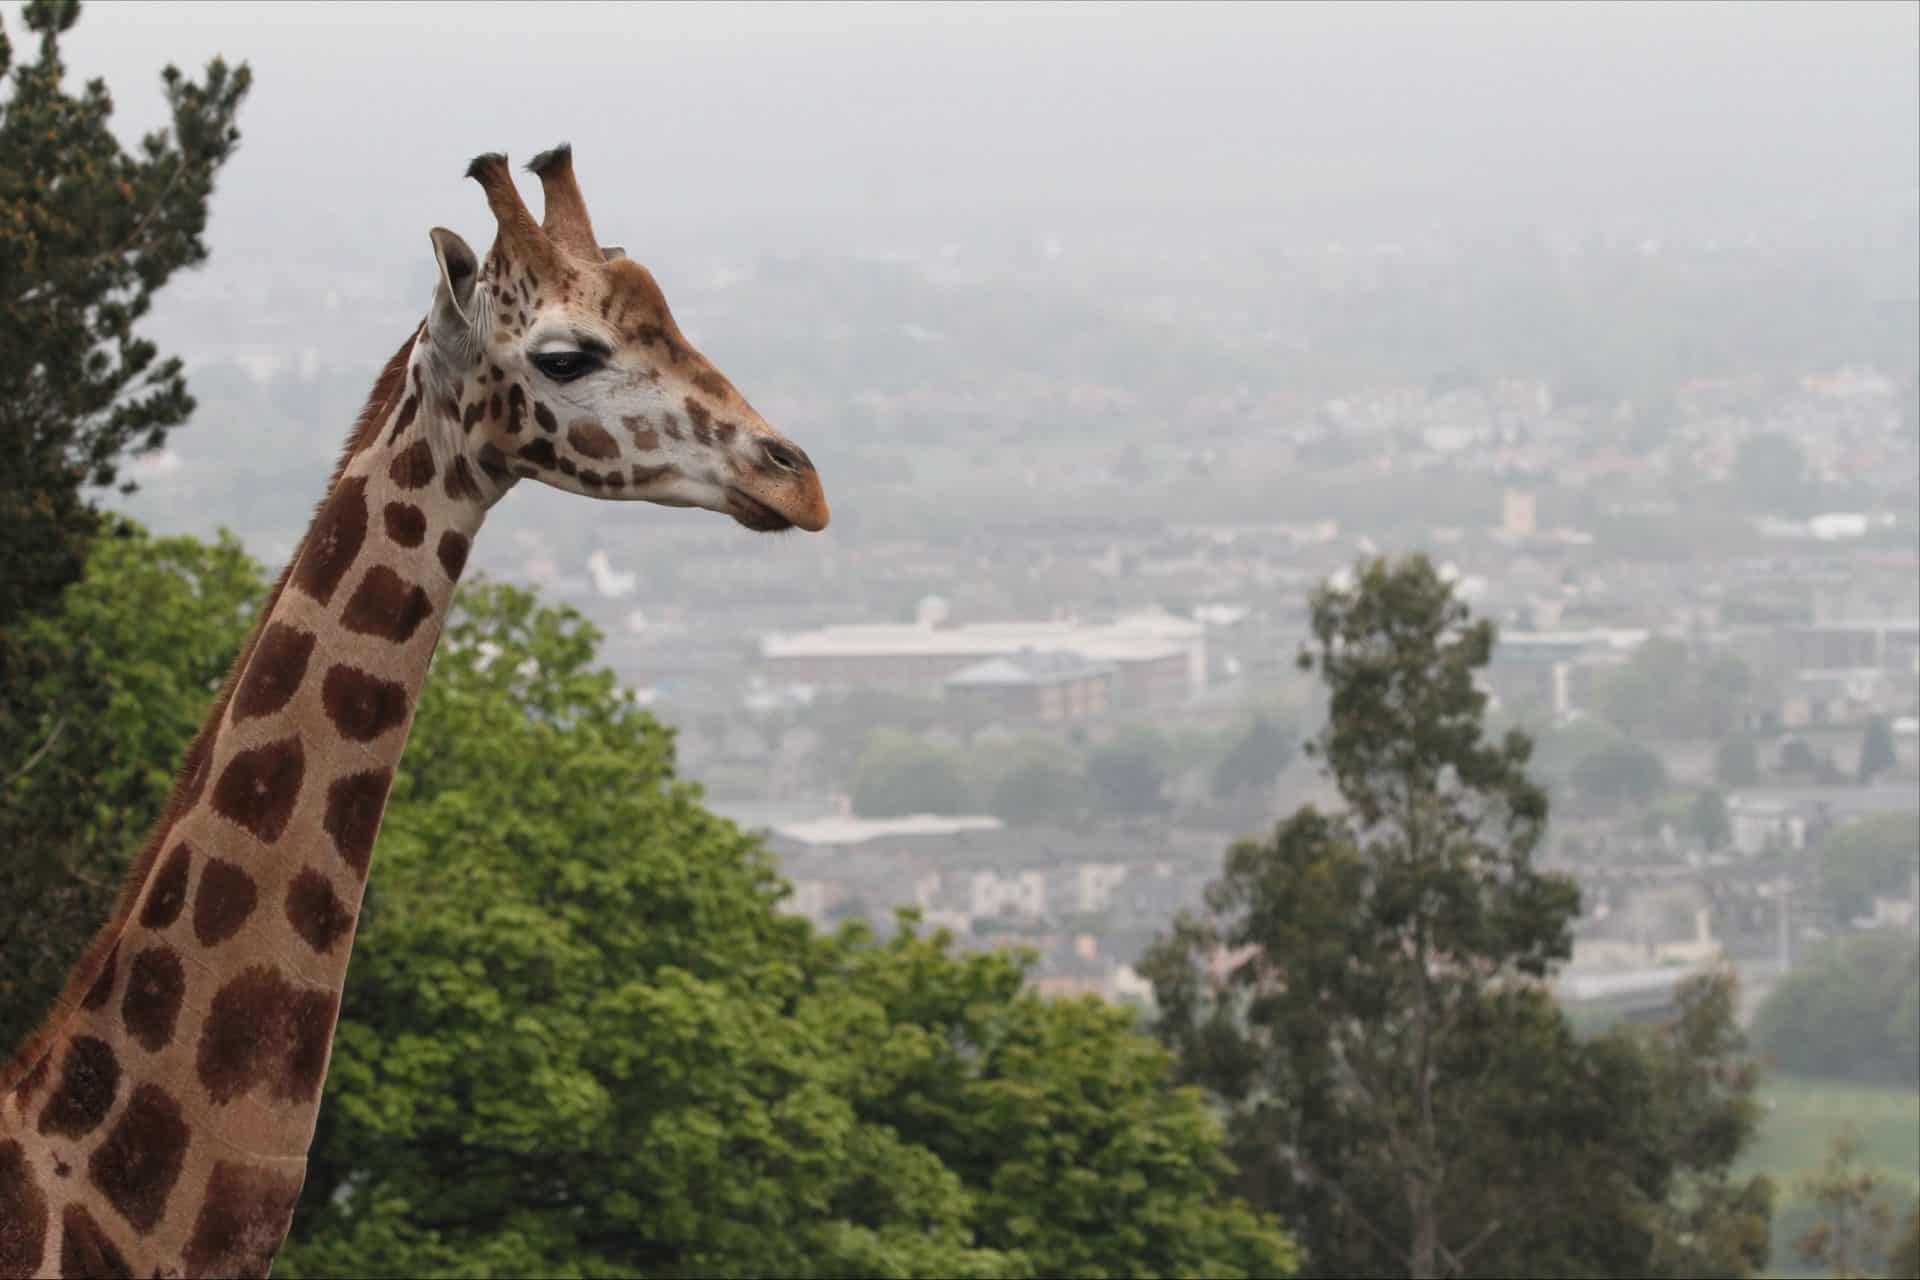 Scottish Archery team adopts giraffe as mascot ahead of Commonwealth Archery Championships Europe